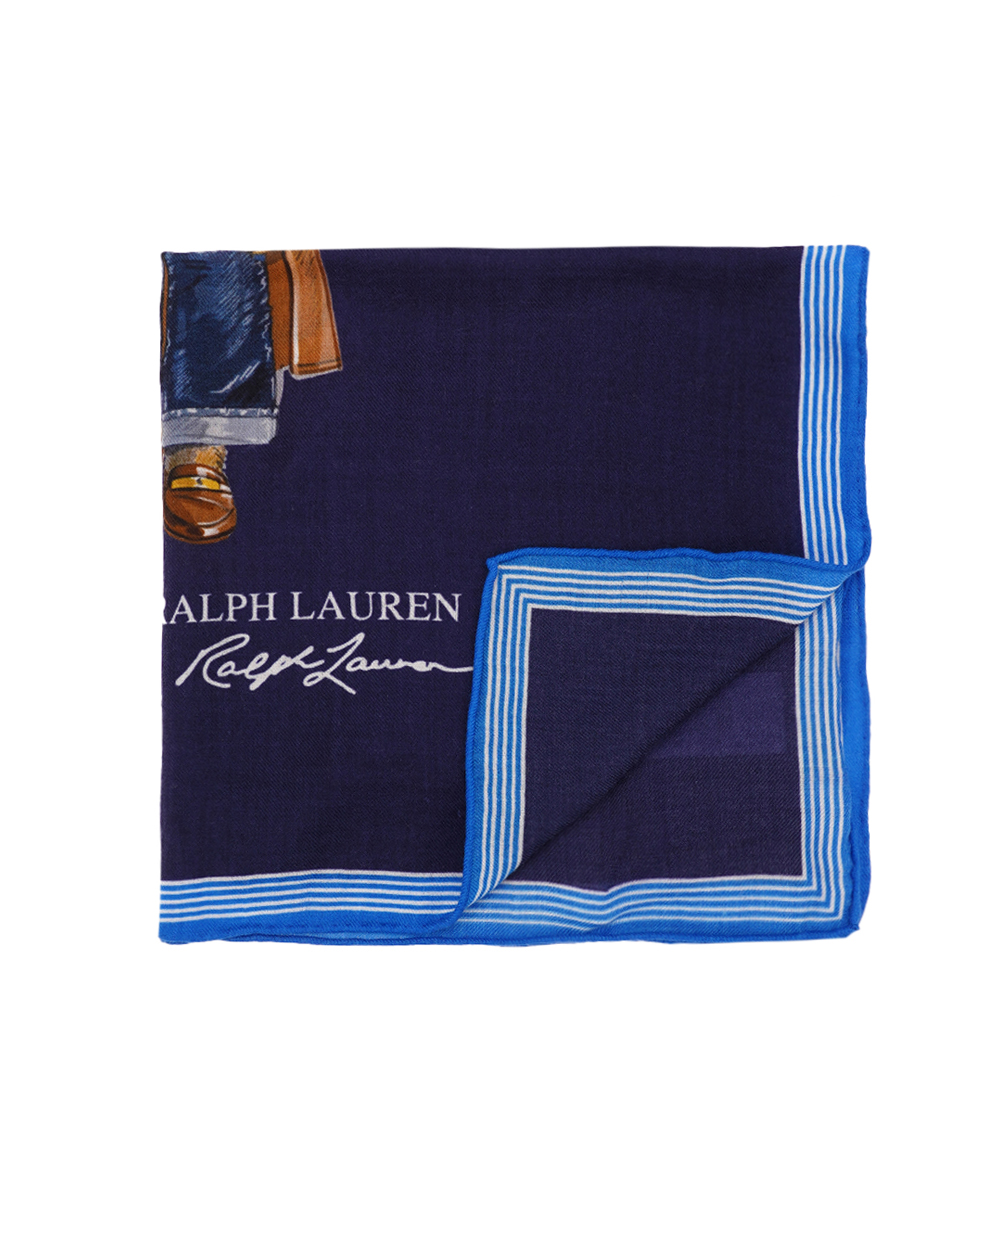 Платок Polo Bear Polo Ralph Lauren 455931399001, темно-синий цвет • Купить в интернет-магазине Kameron